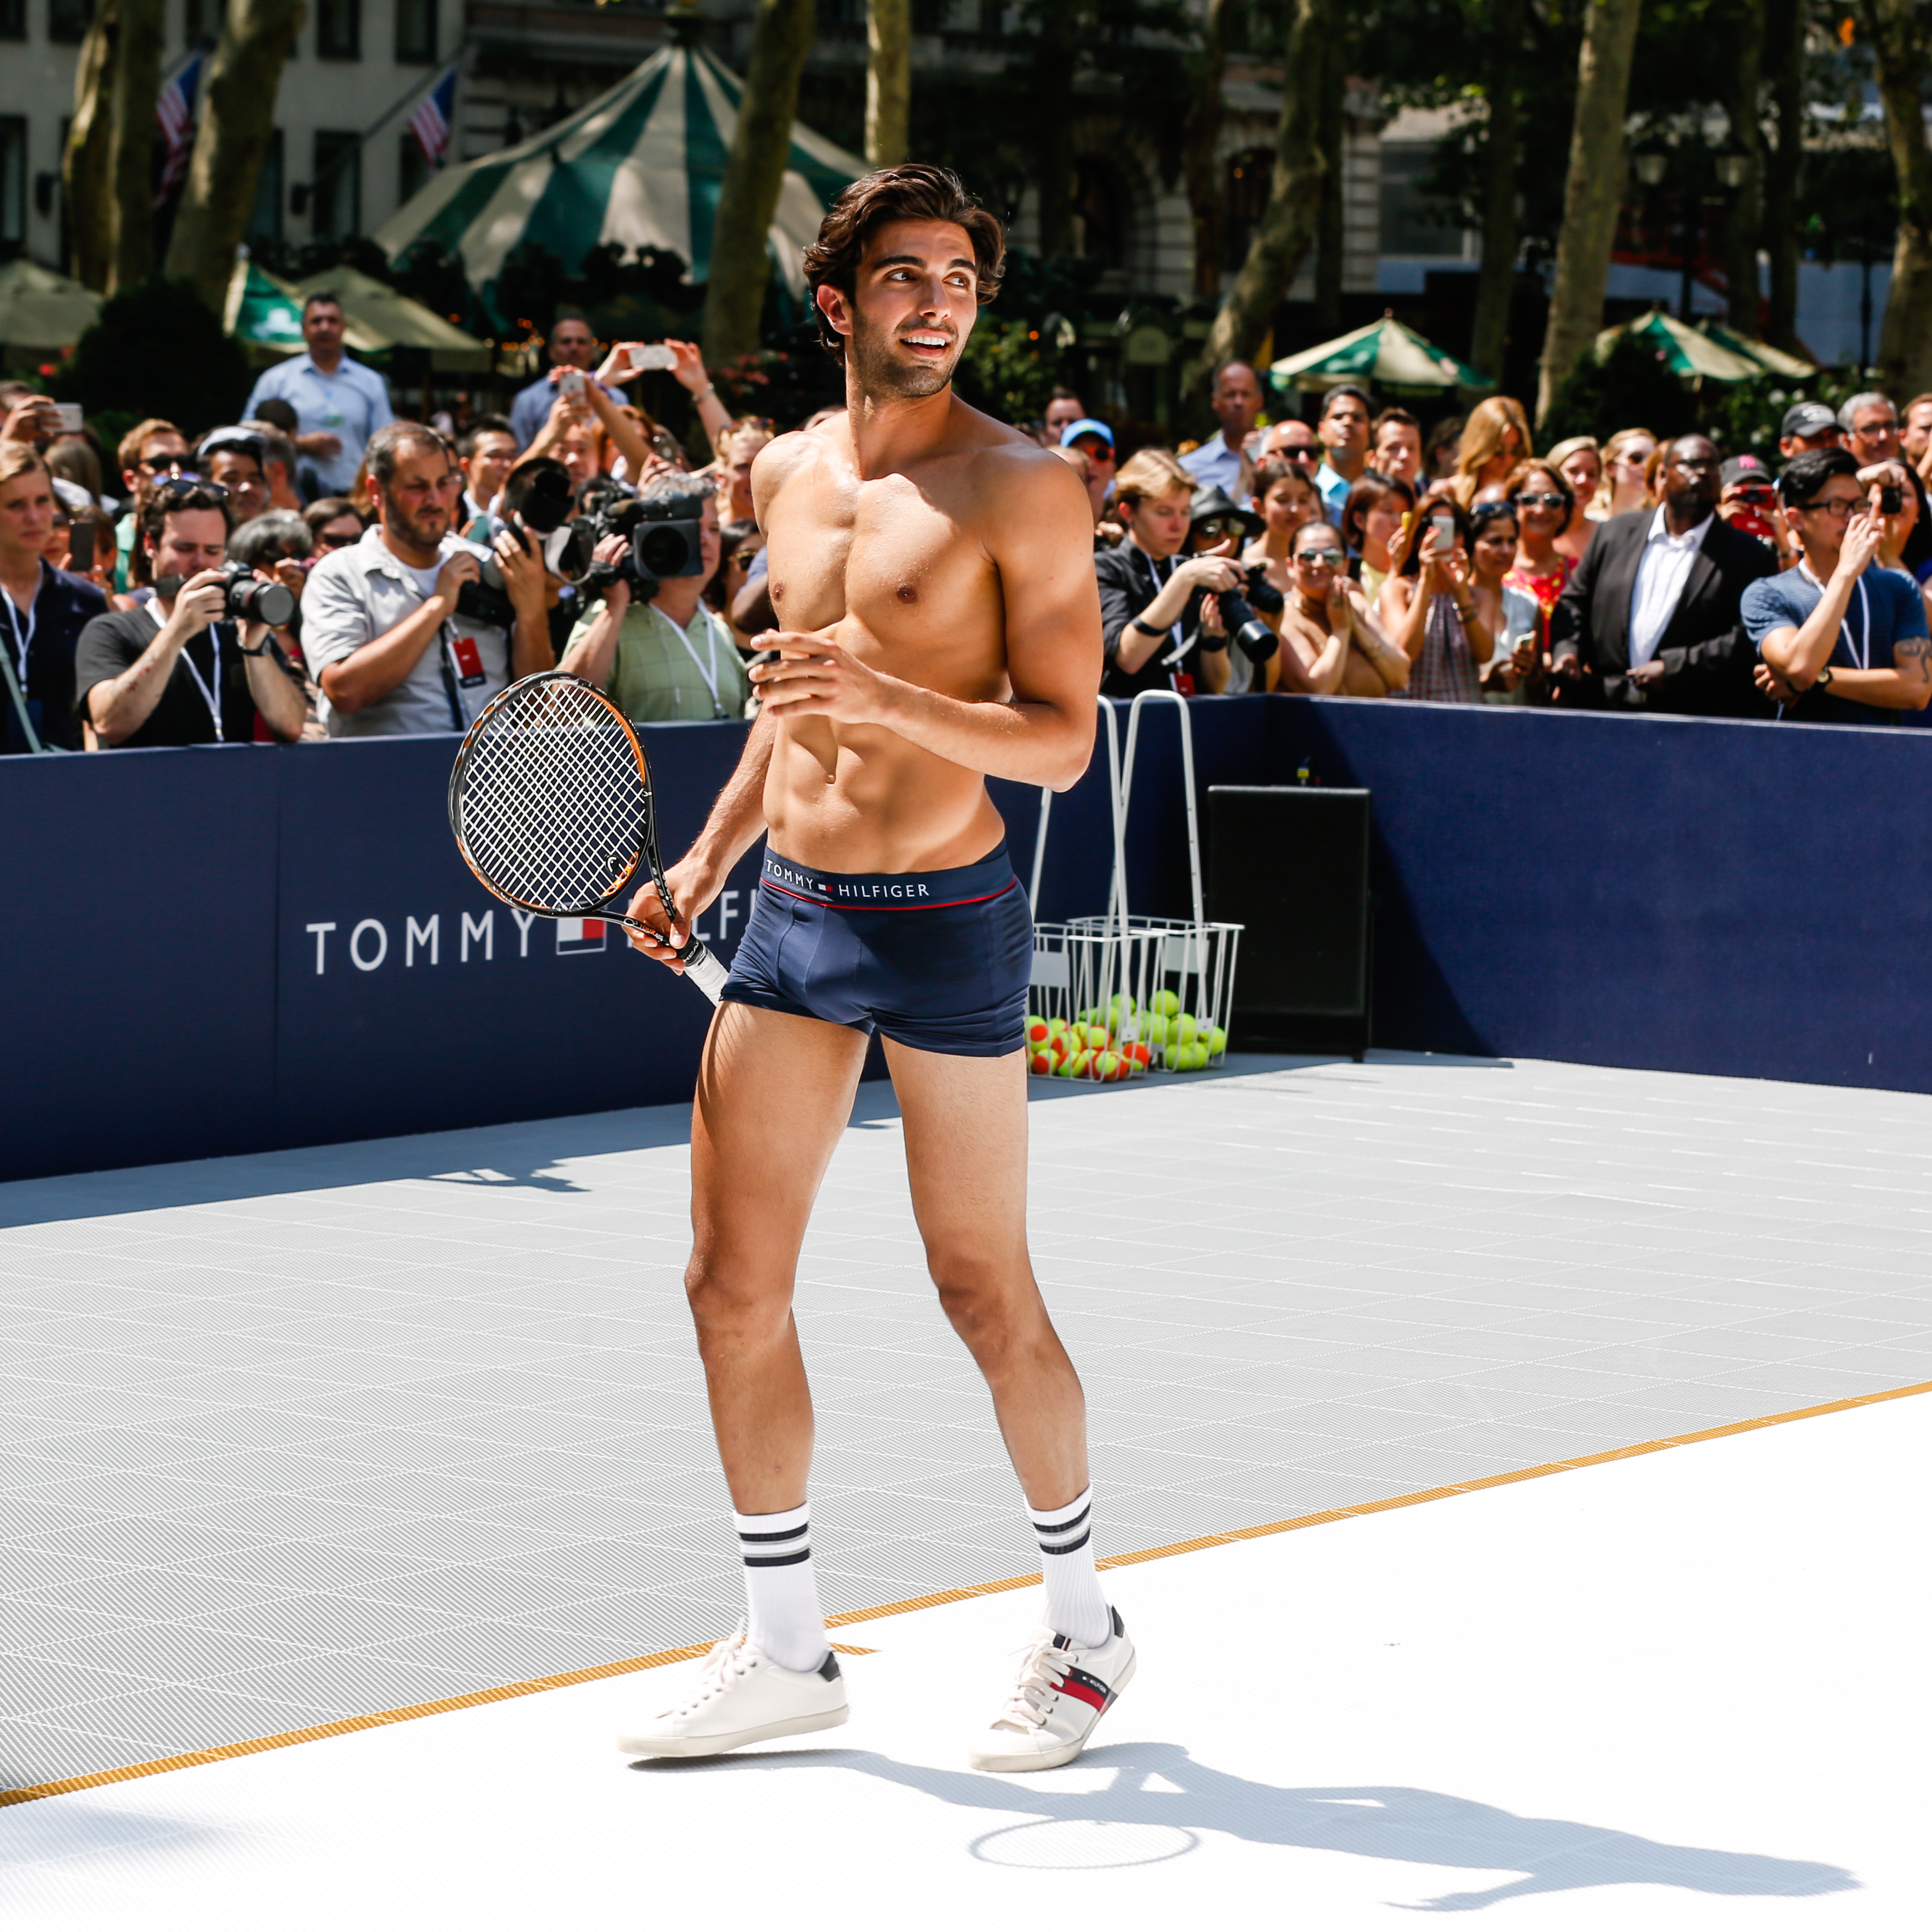 Tommy Hilfiger Hosts “Strip Tennis” Match To Welcome Rafael Nadal